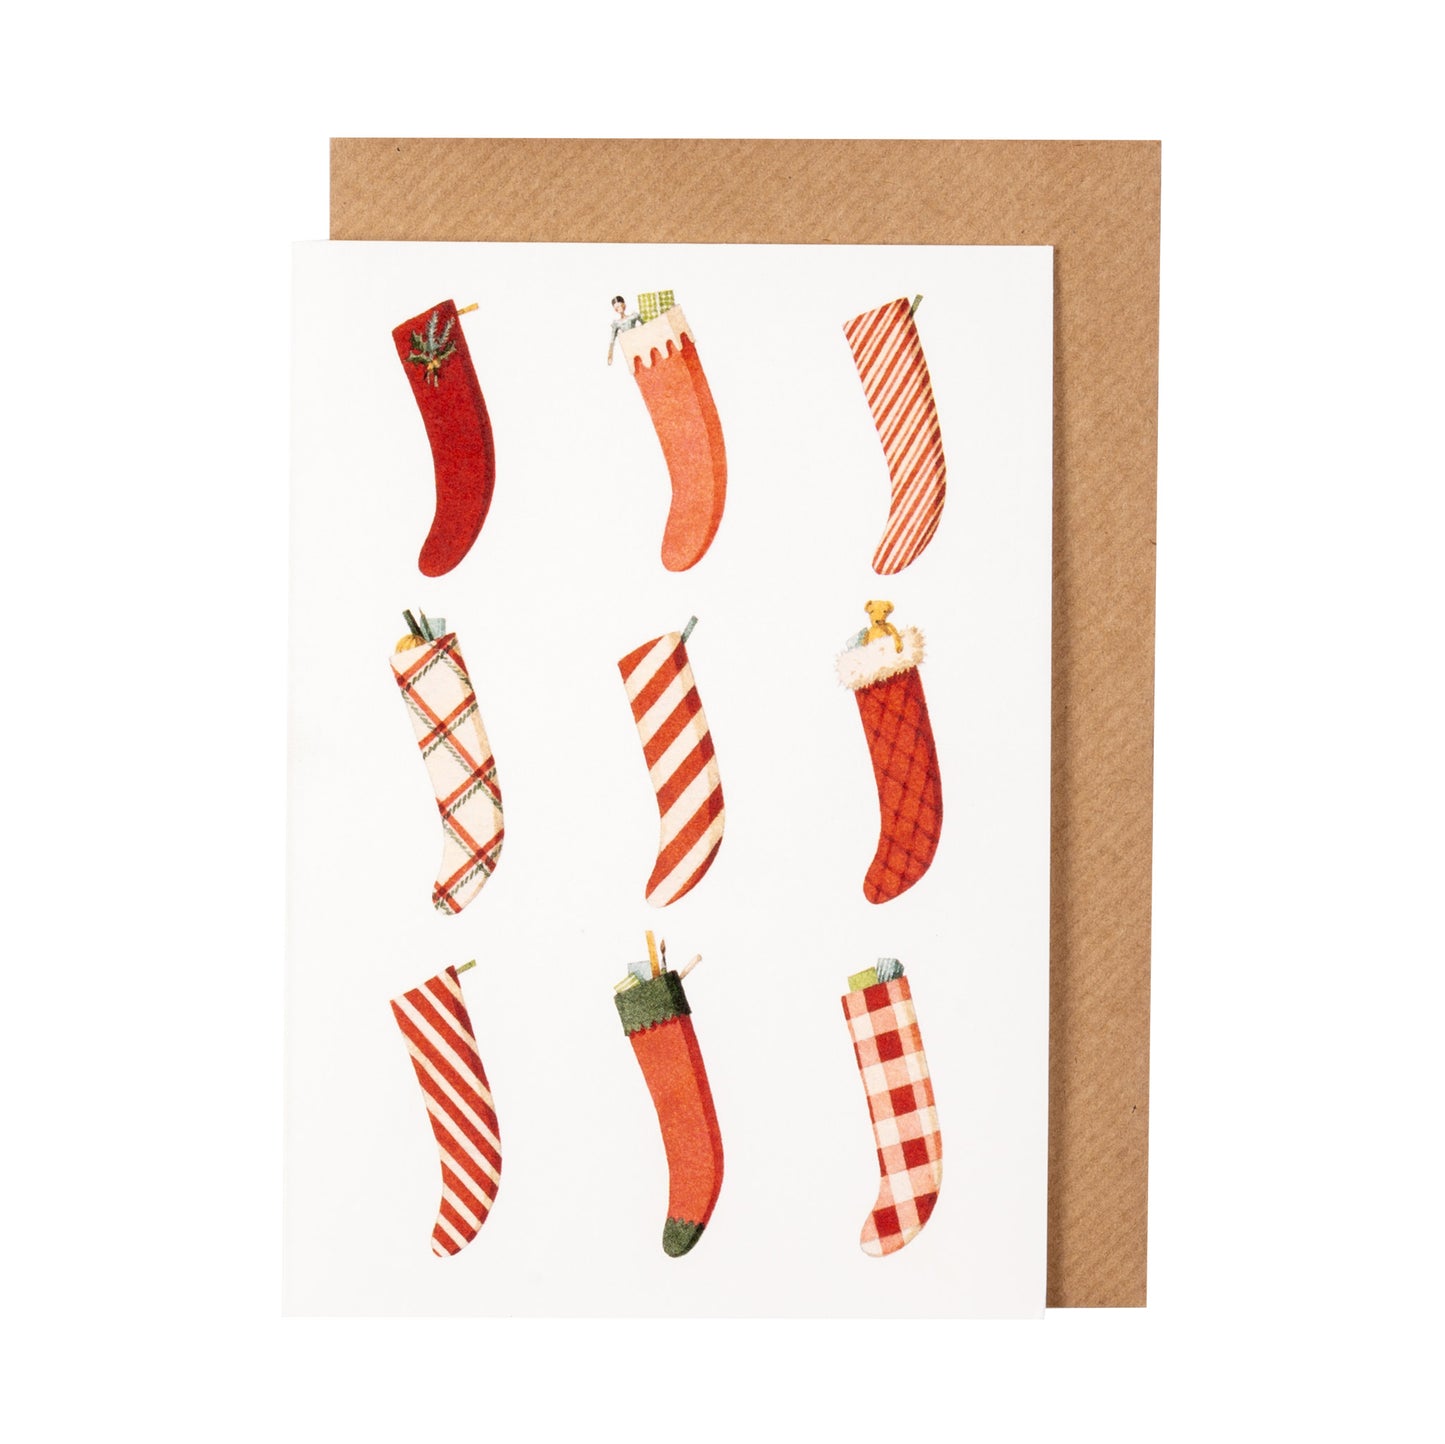 Christmas Cards Ten Pack - Christmas Stockings